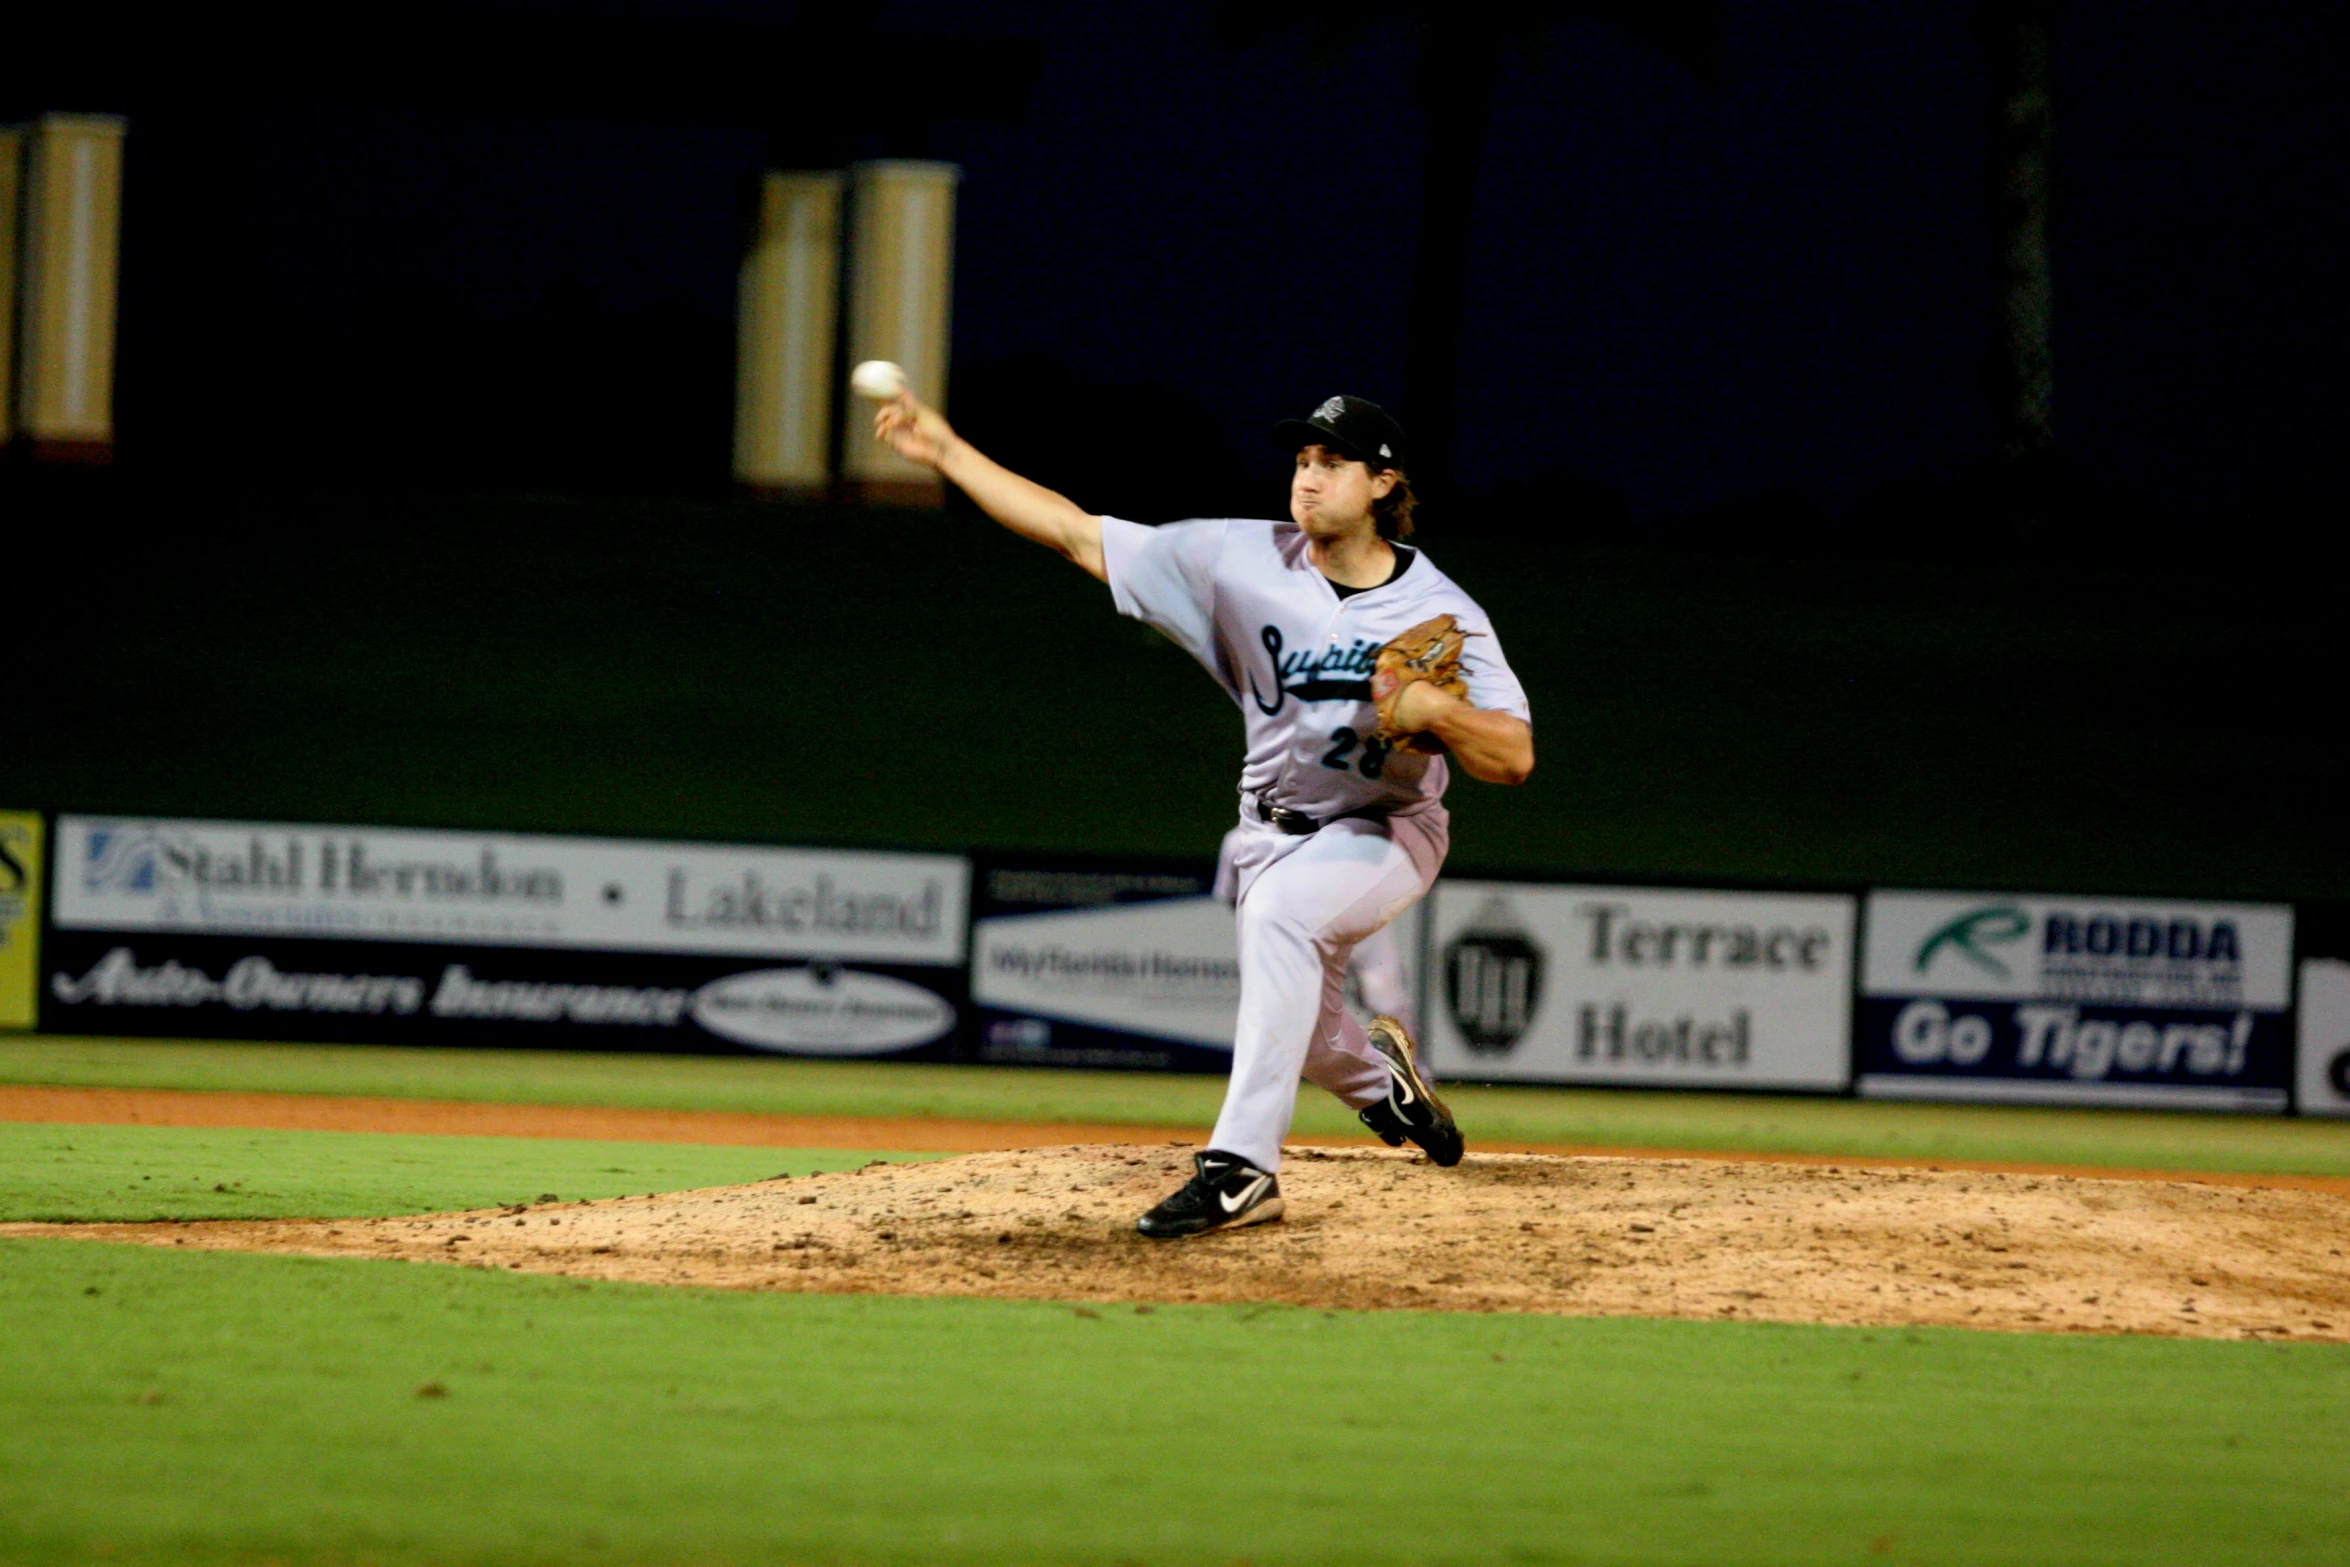 a pitcher pitching a baseball on a field